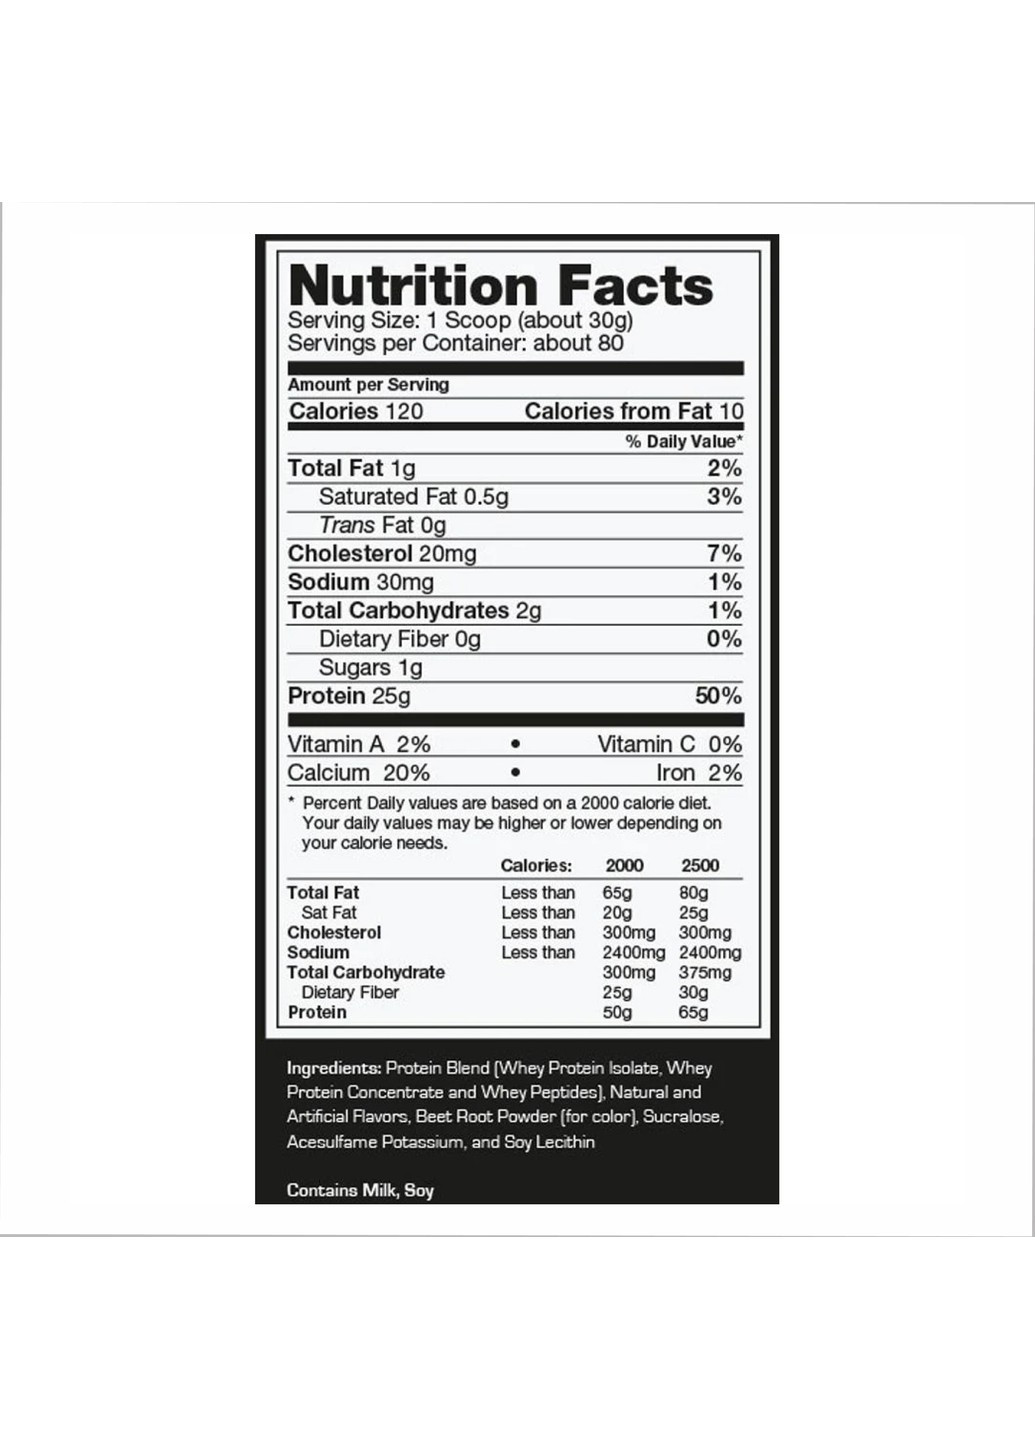 Prostar Whey 5,28lb - 2390g Raspberry Ultimate Nutrition (270846123)